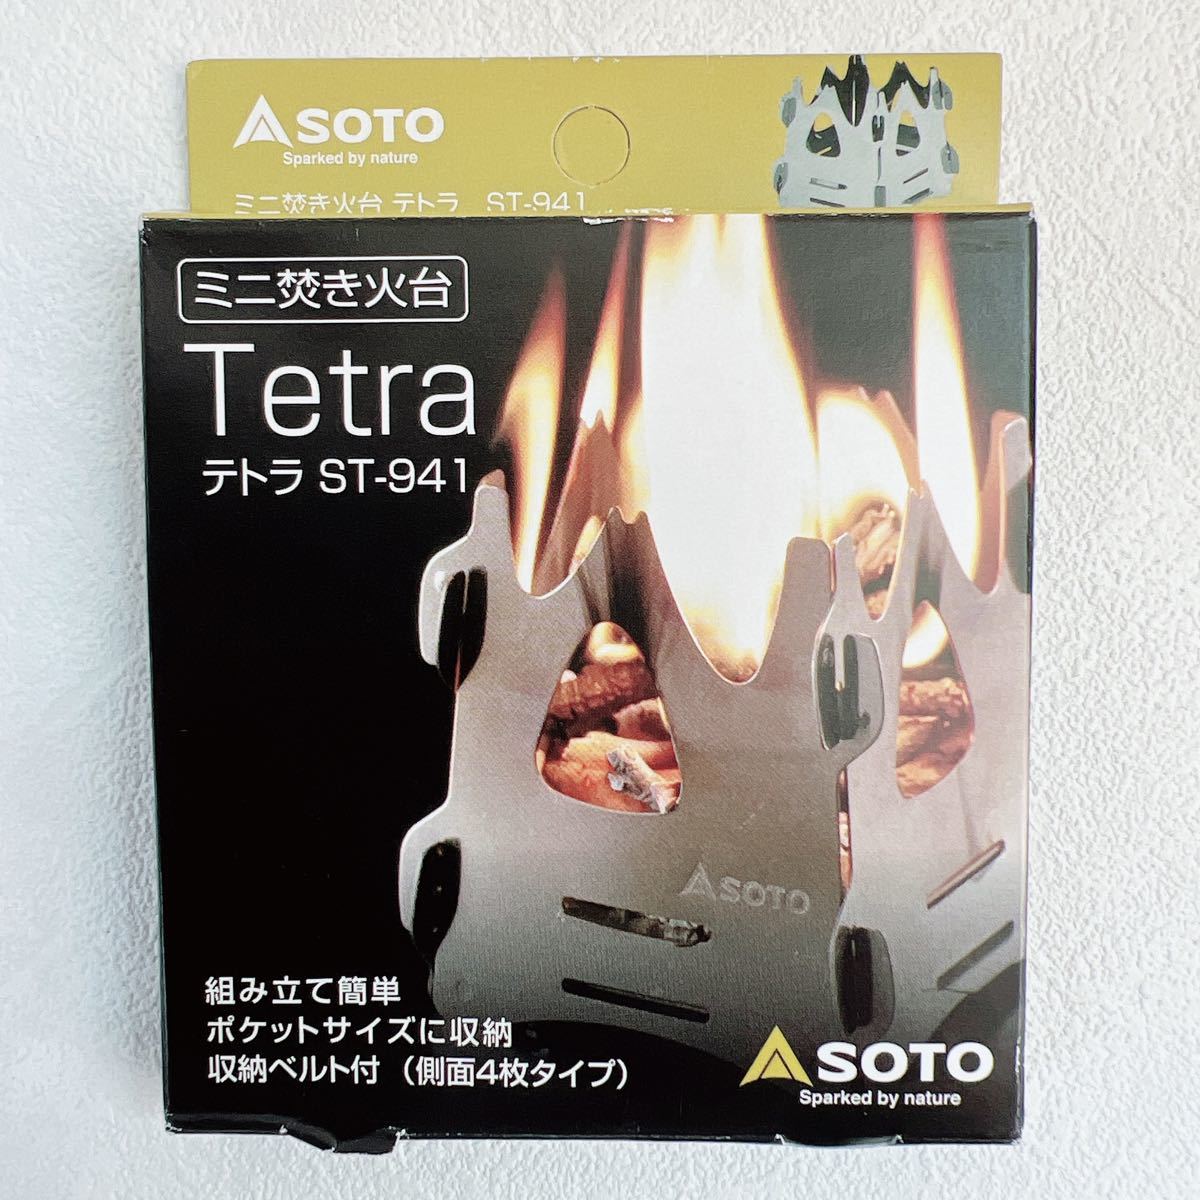 SOTO ミニ焚き火台 テトラ ST-941